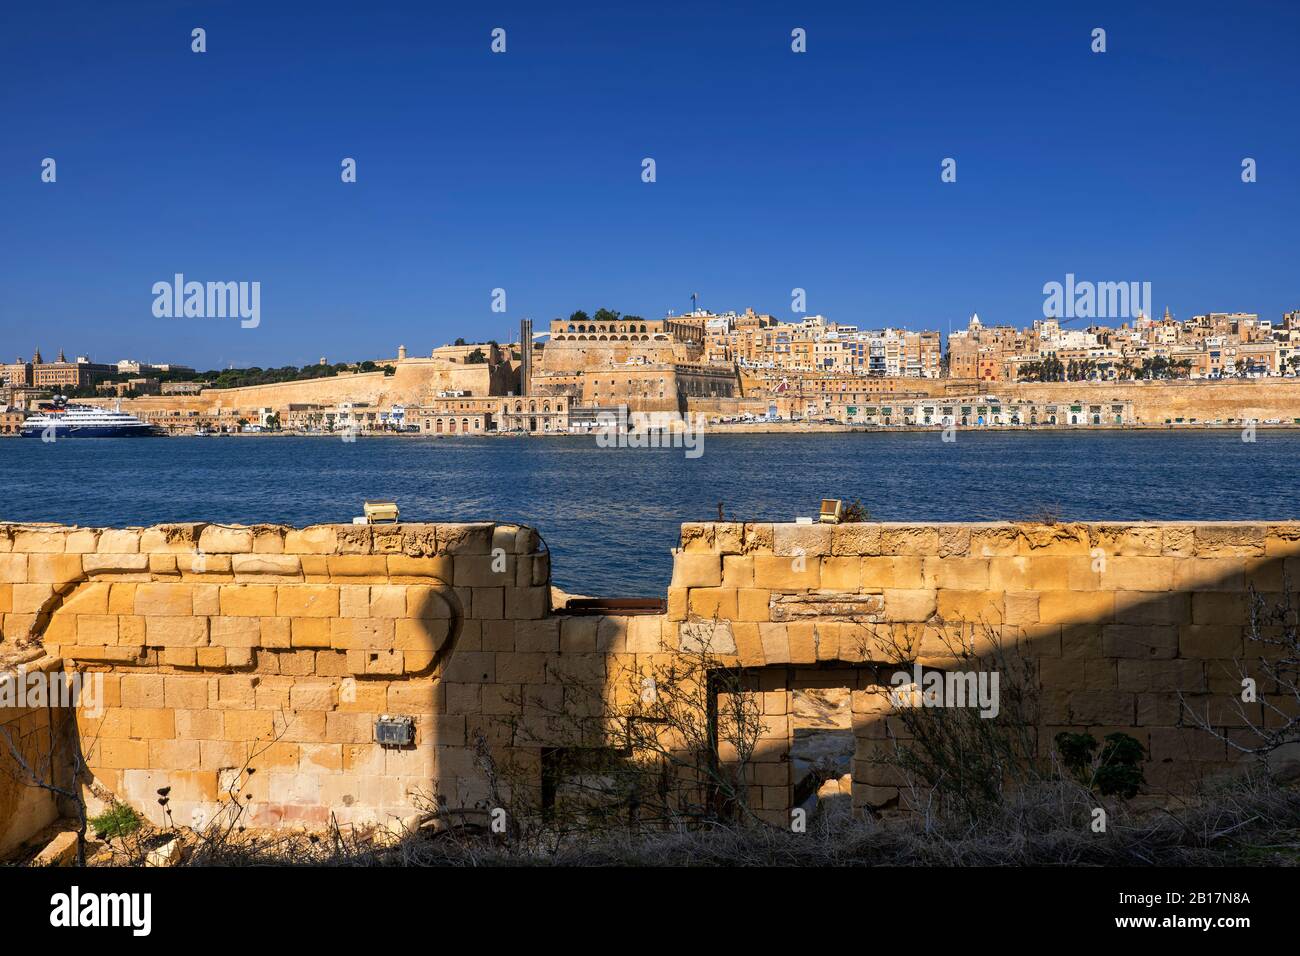 Malta, Valletta, View of city from Birgu side Stock Photo